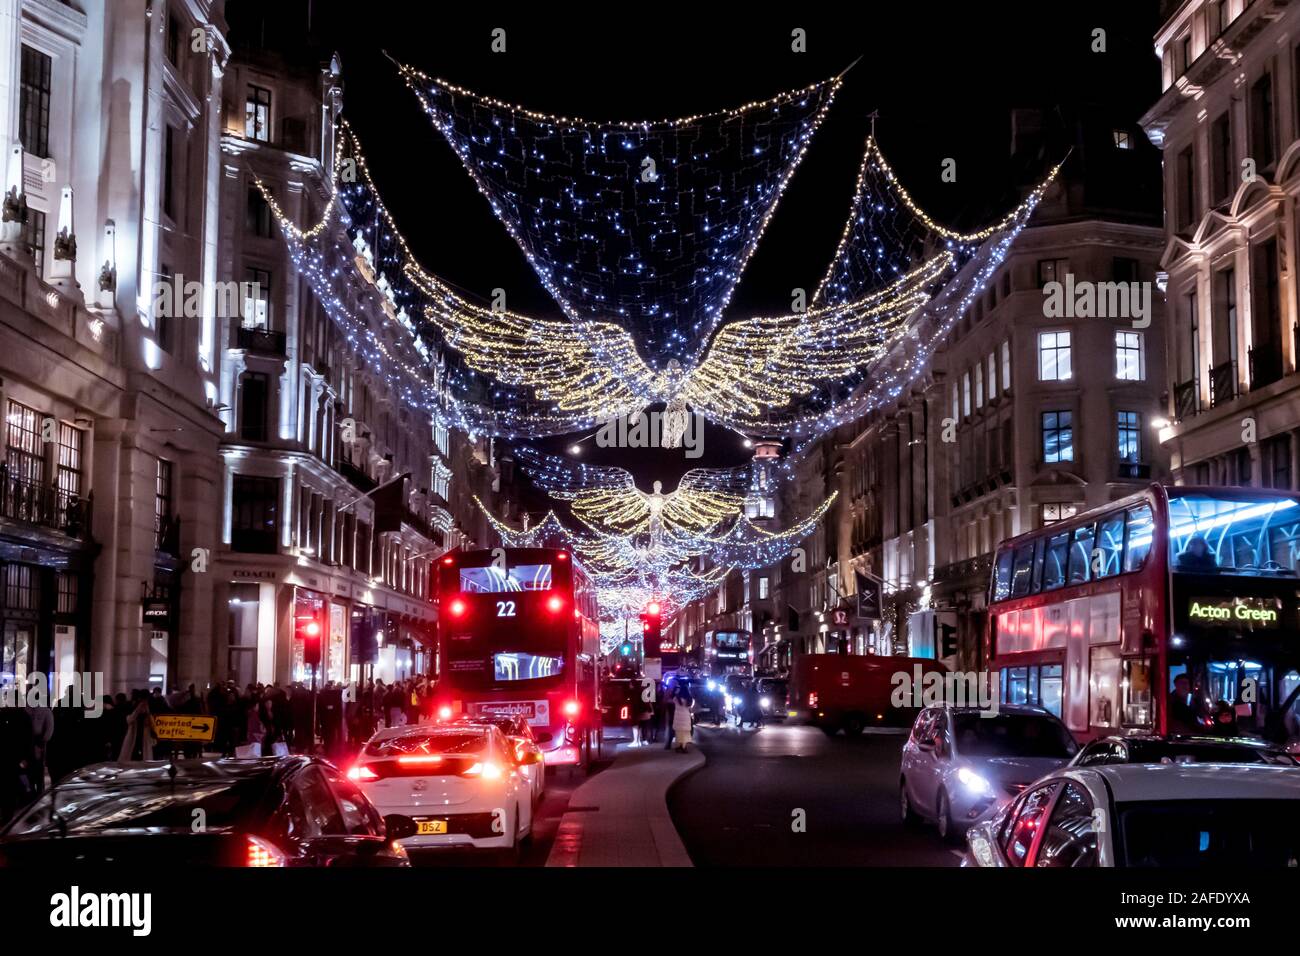 London, England, UK - December 13 2019: London festive Christmas street lights and decorations on Regents Street Stock Photo